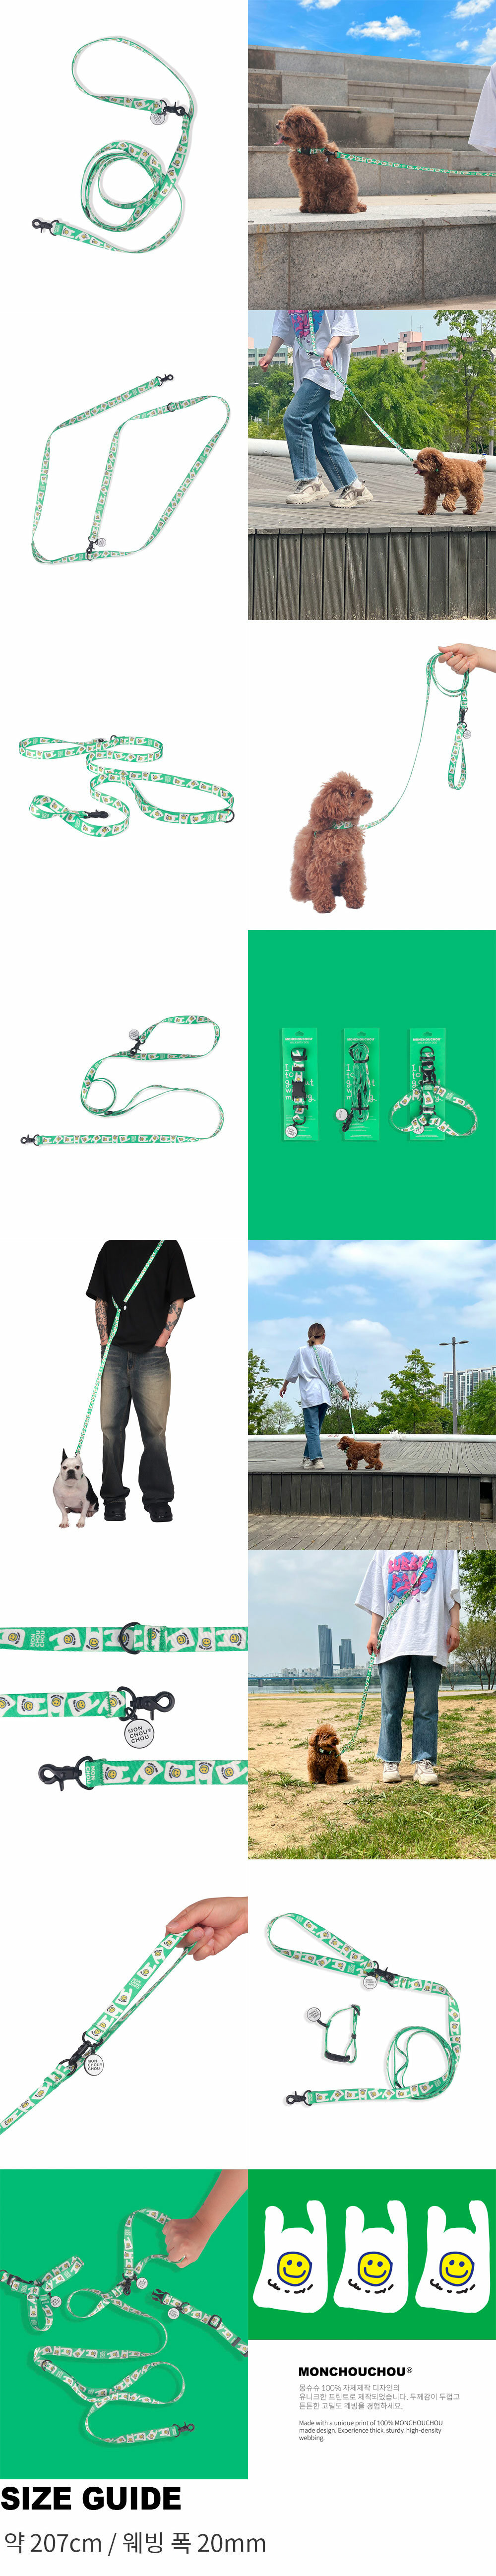 Walk-with-dog_Leash-Plastic-Bag-Info.jpg